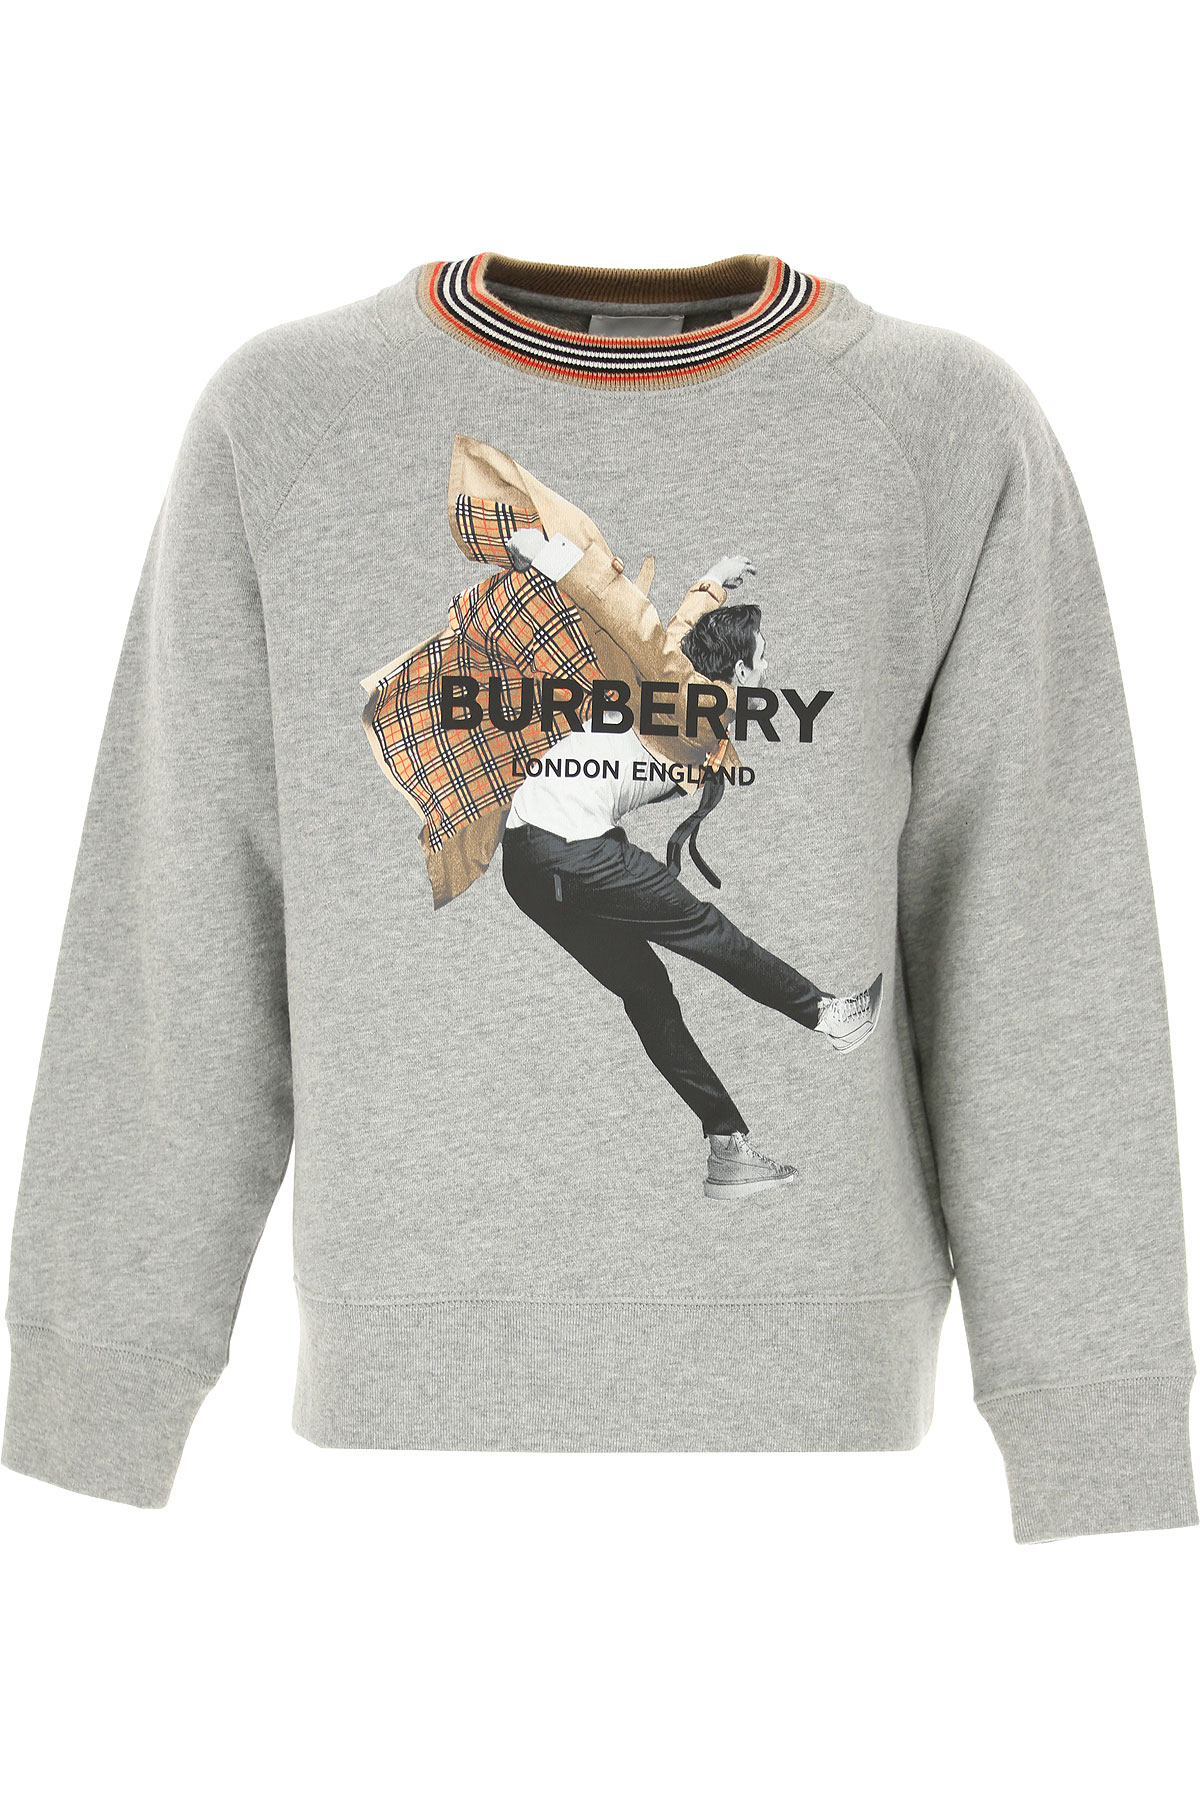 Burberry Kinder Sweatshirt & Kapuzenpullover für Jungen Günstig im Sale, Grau, Baumwolle, 2017, 10Y 3Y 4Y 6Y 8Y